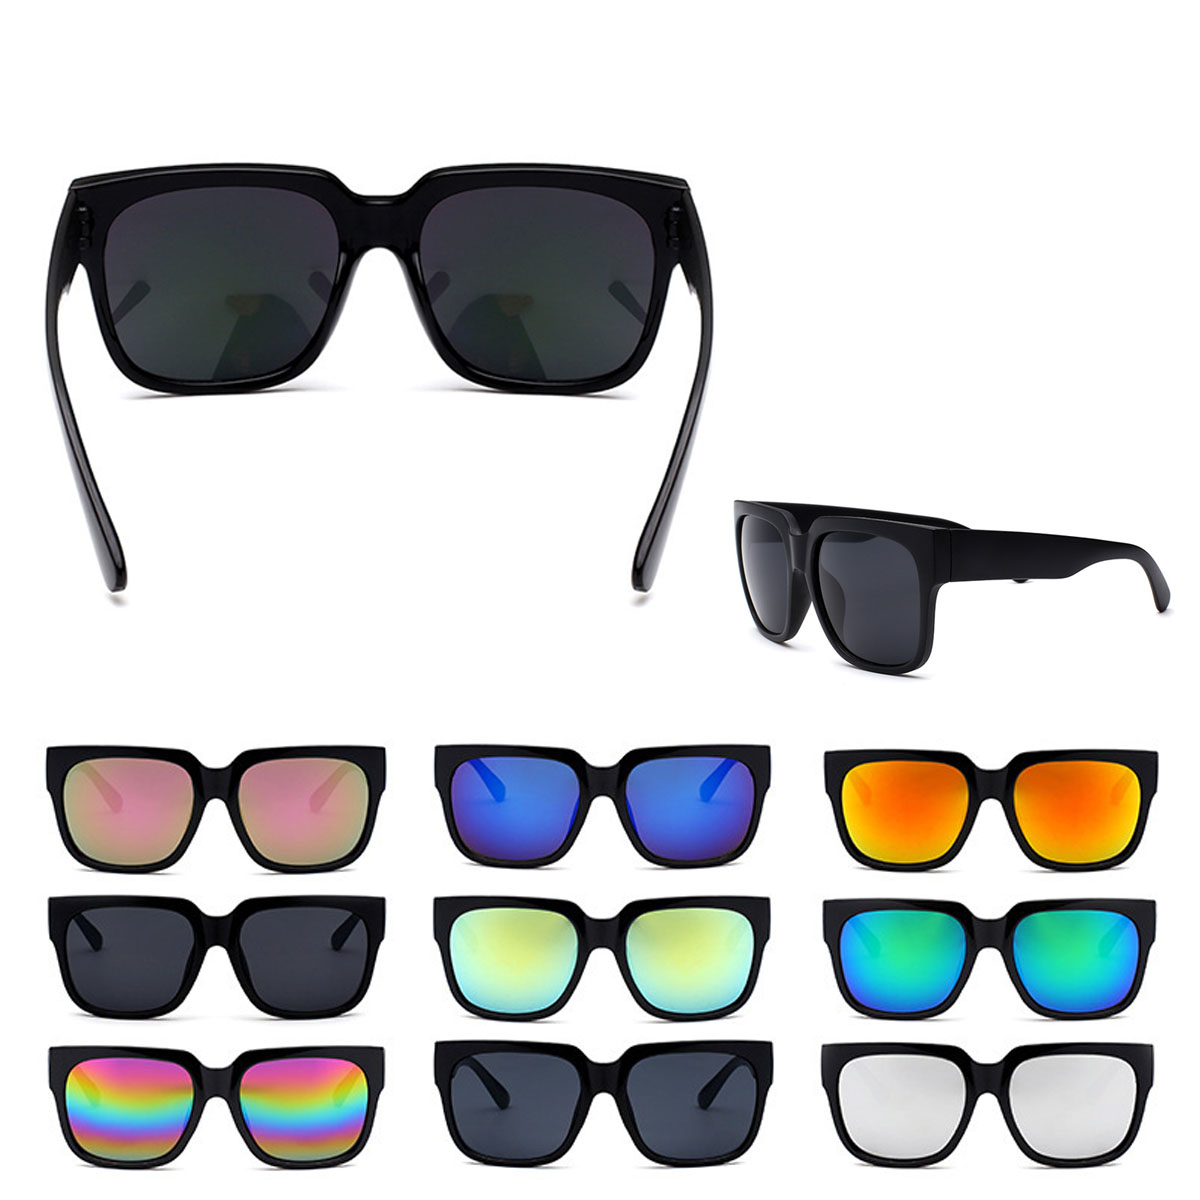 GL-AKL0080 Promotional Fashion Sunglasses for Adult